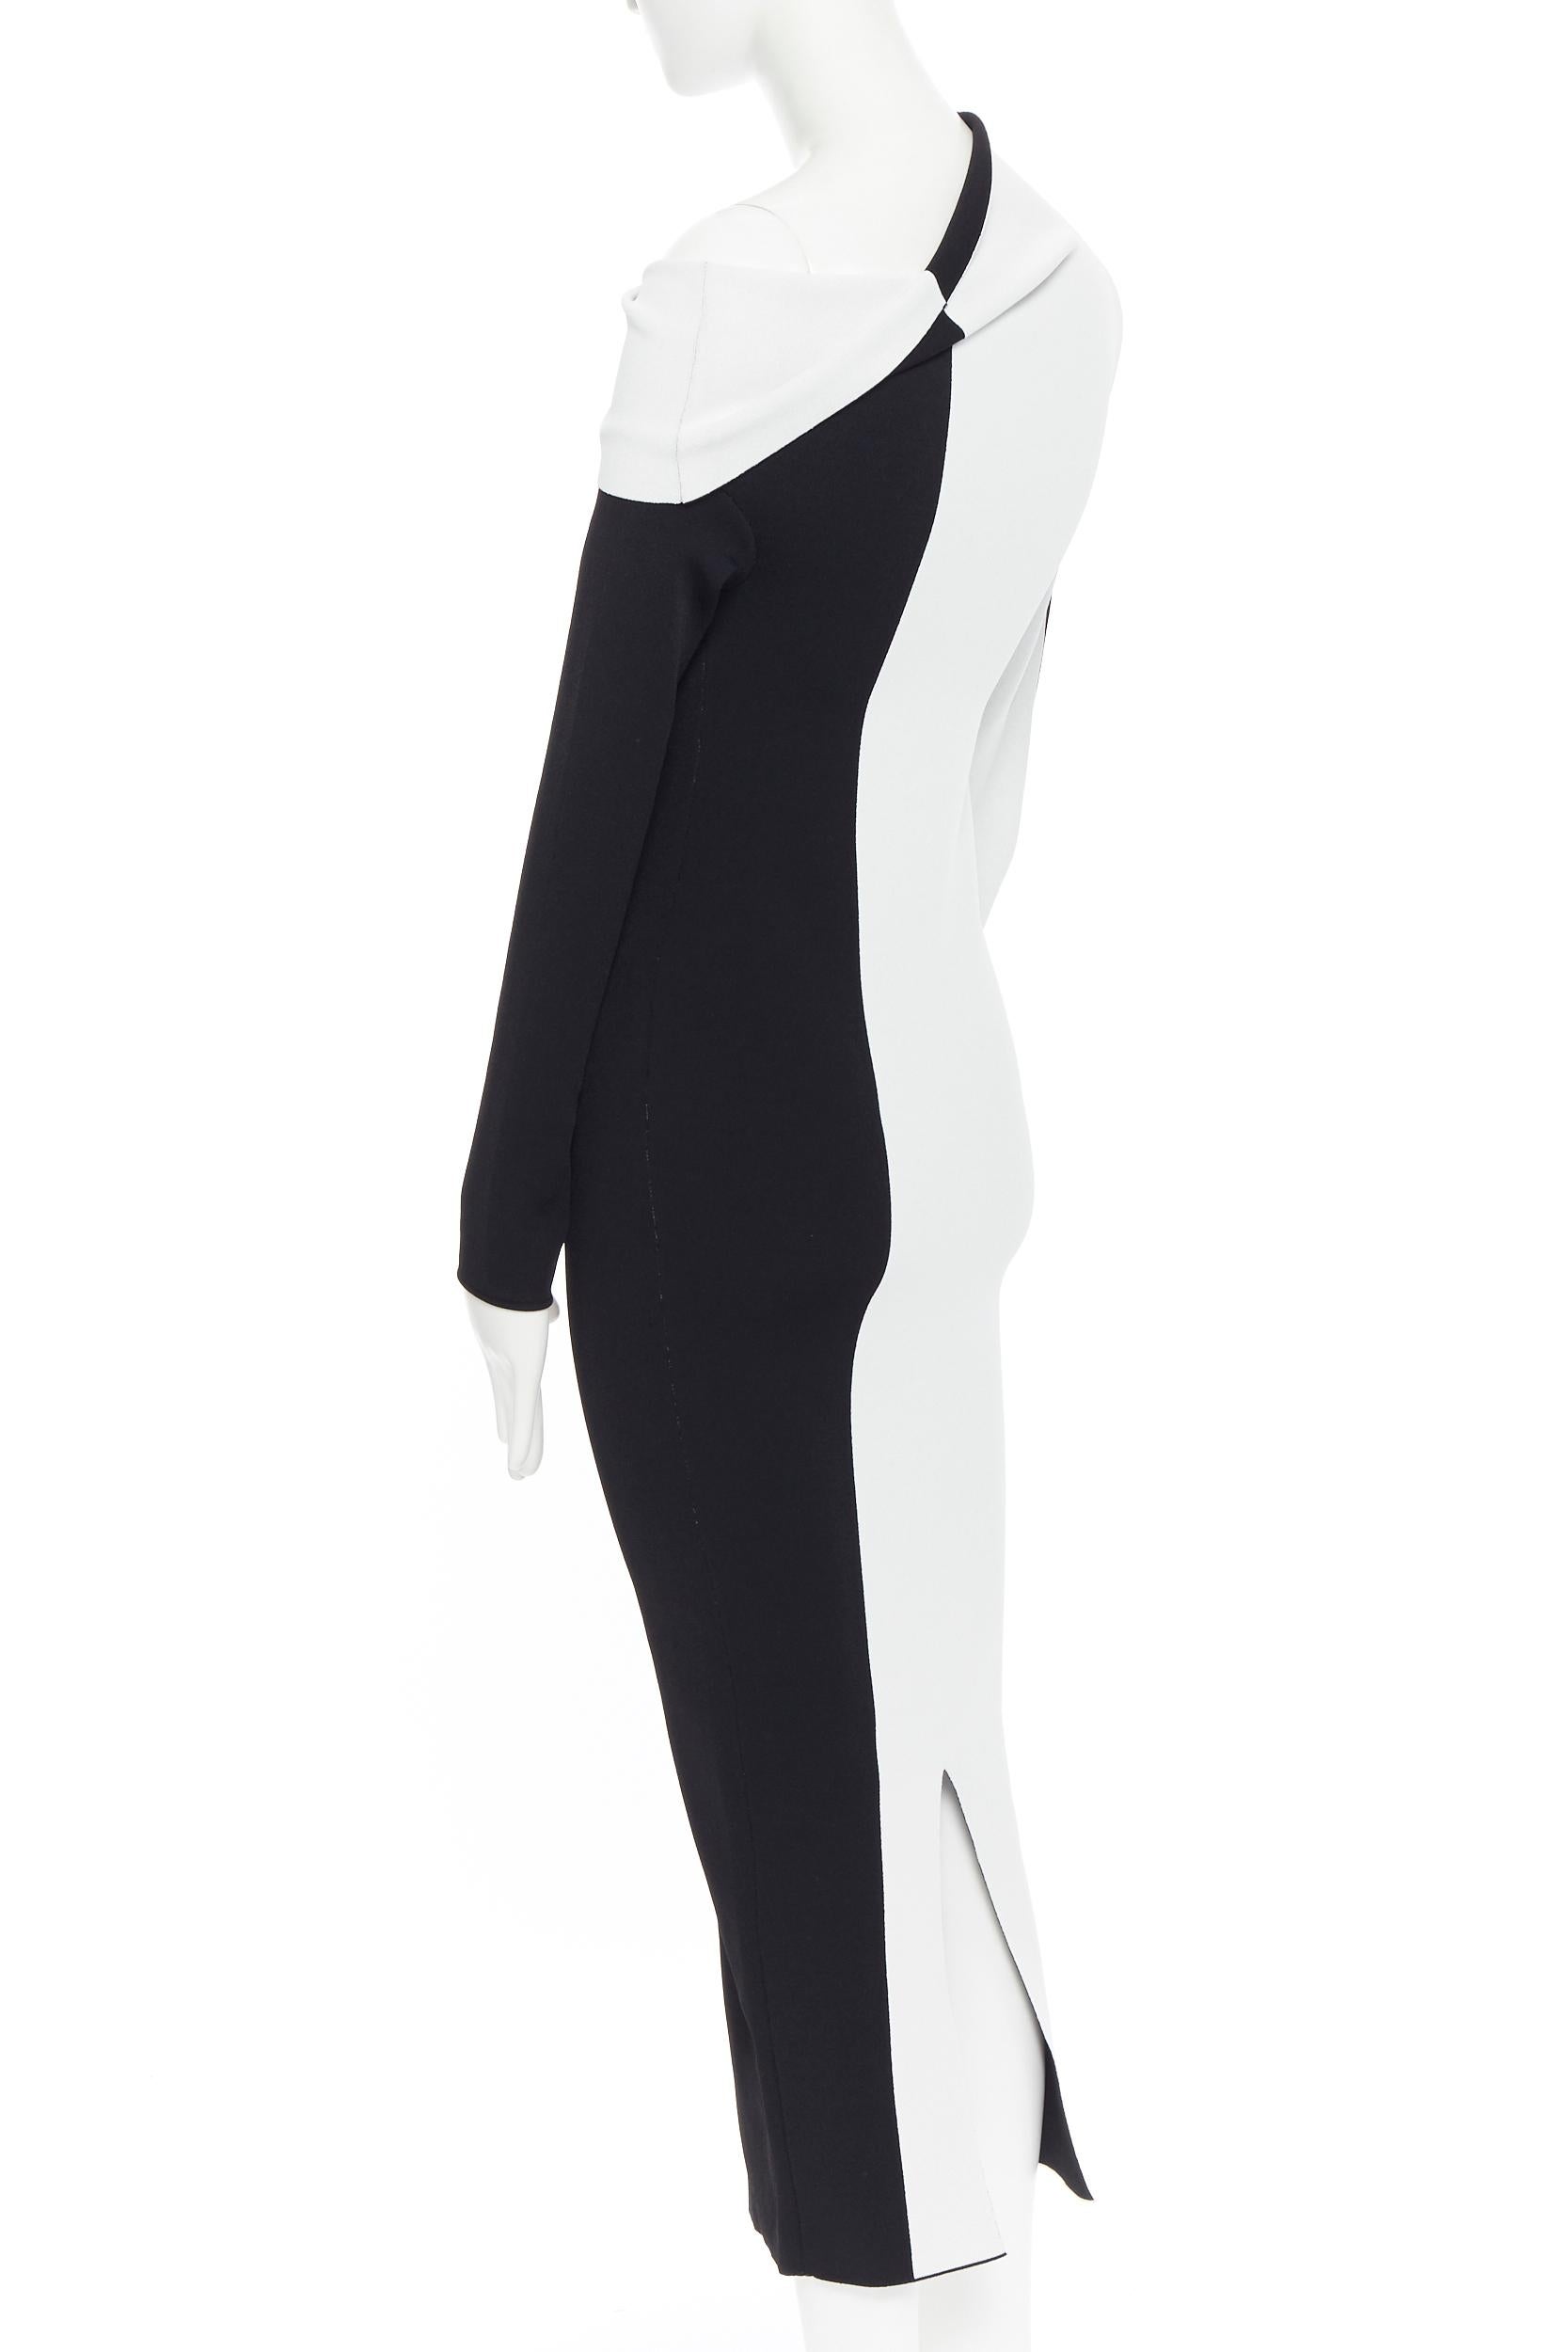 HAIDER ACKERMANN SS18 black white colorblocked bodycon off shoulder dress S 2